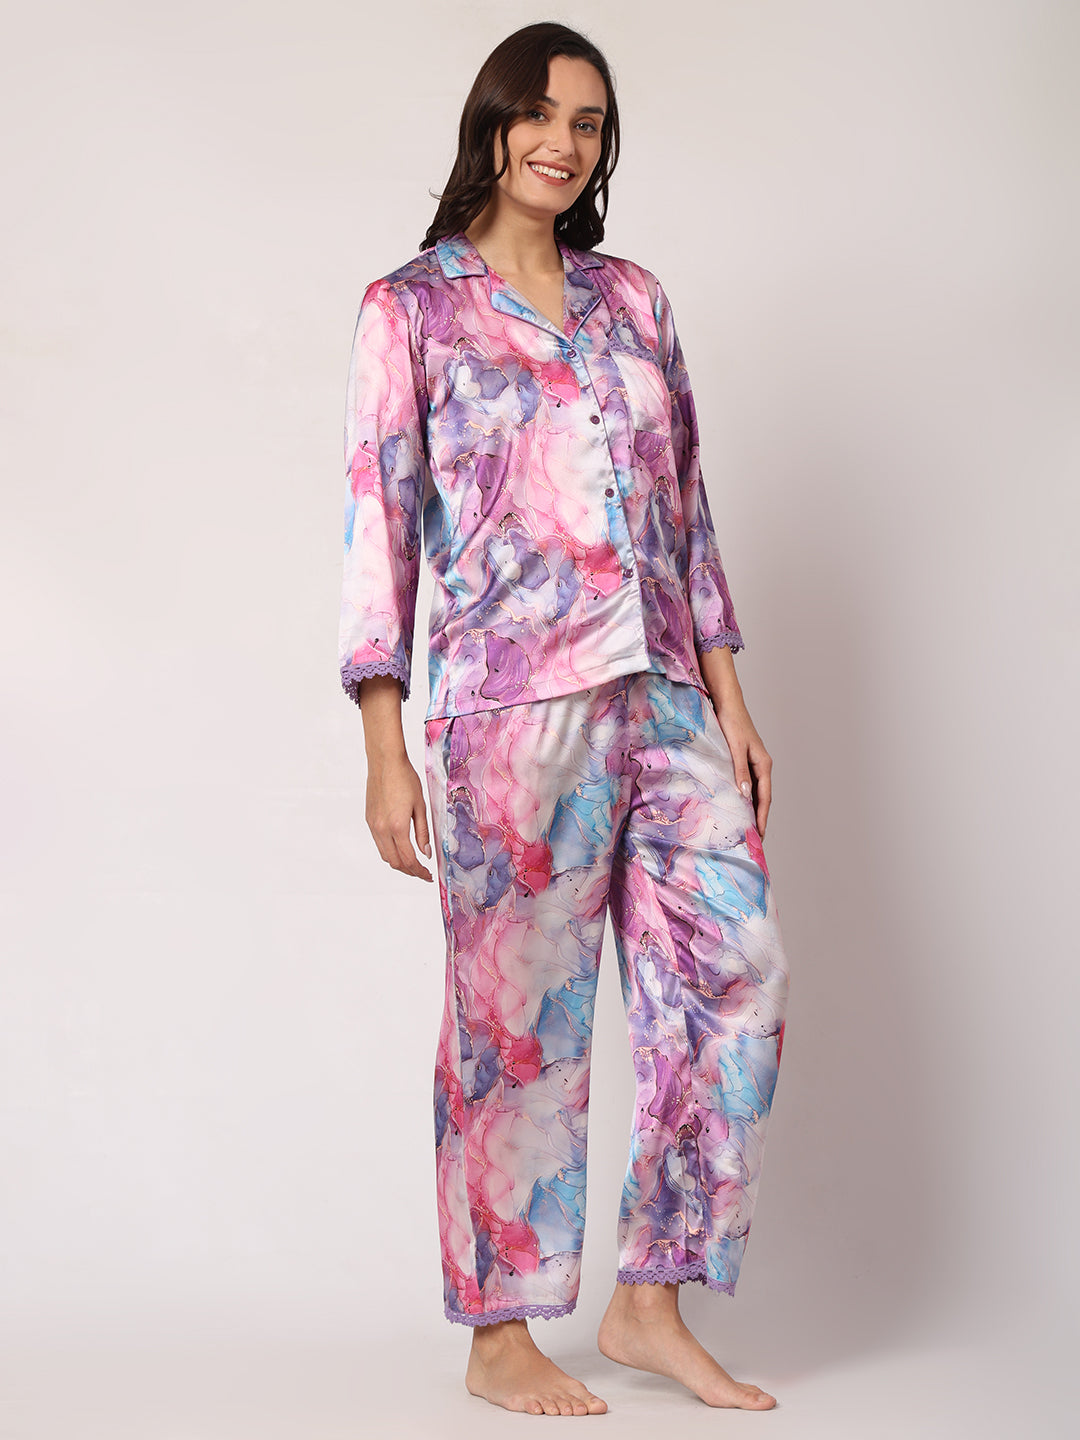 GOCHIKKO Women's Satin Printed Color Night Suit Set of Shirt & Pyjama Pack of 1(Wisteria Purple printed)